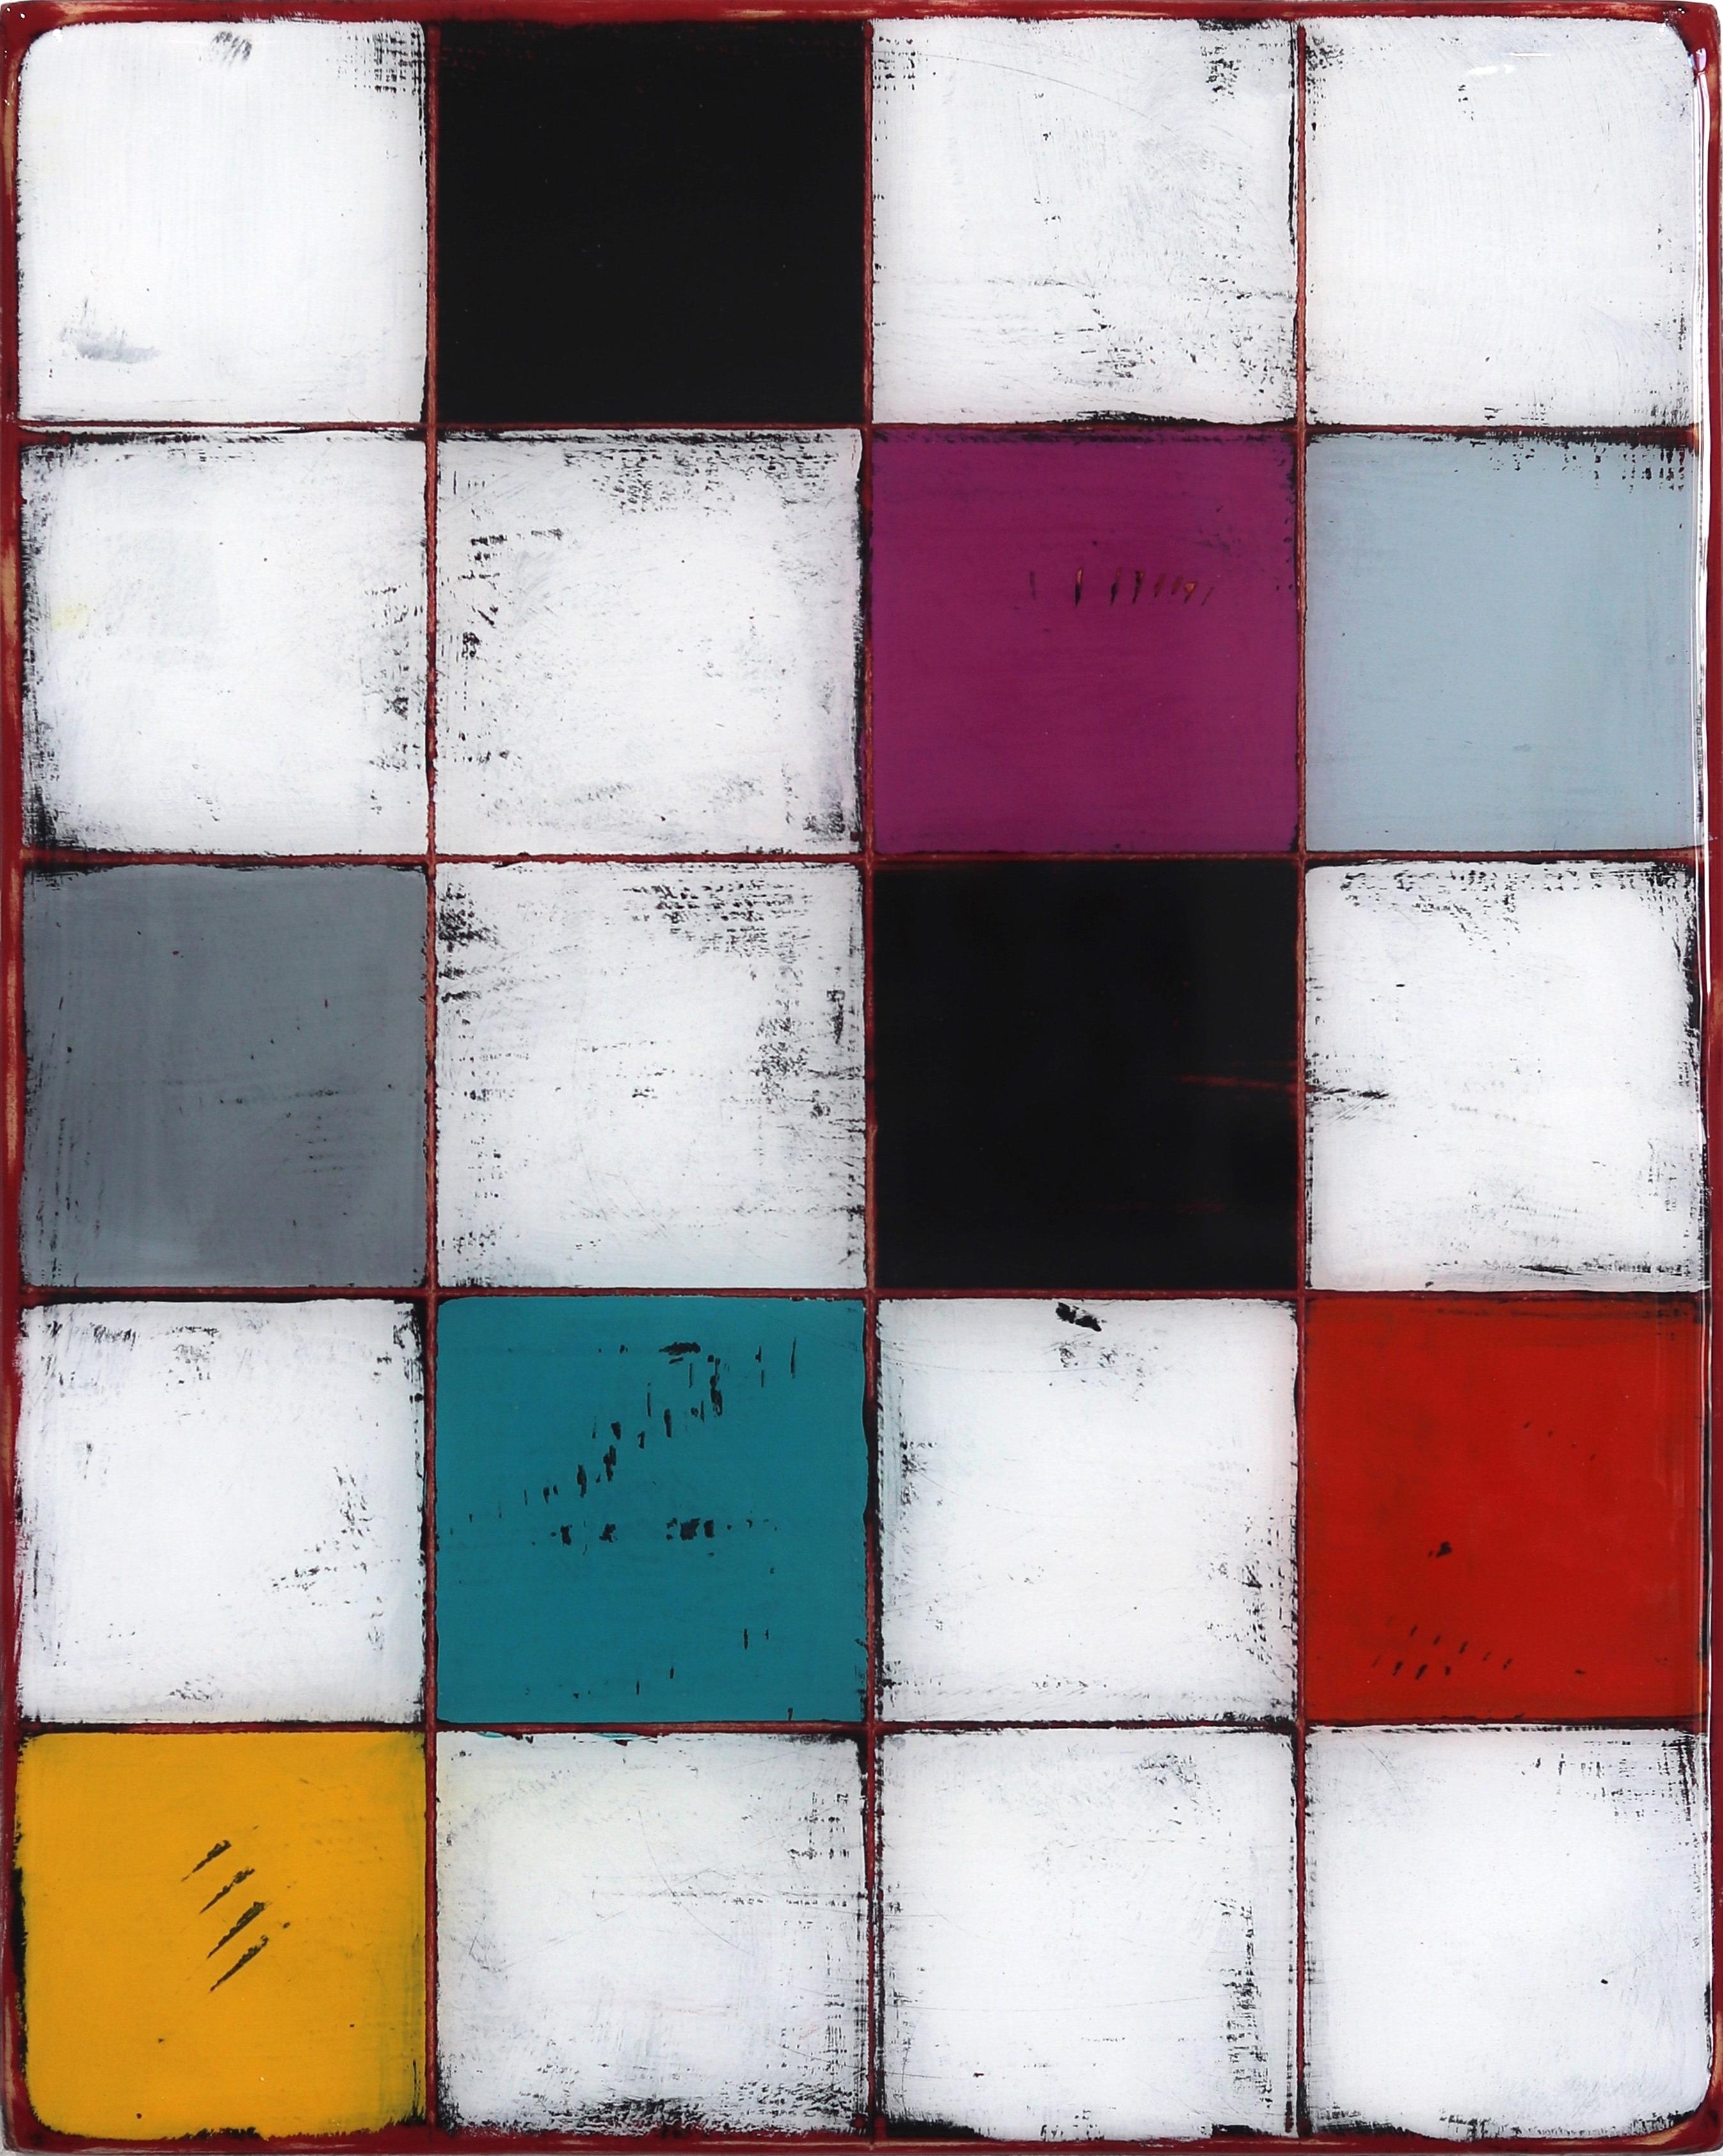 Jazz 23 - Acrylic Checkerboard Black and White Jewel Tone Resin Artwork - Mixed Media Art by Ricky Hunt